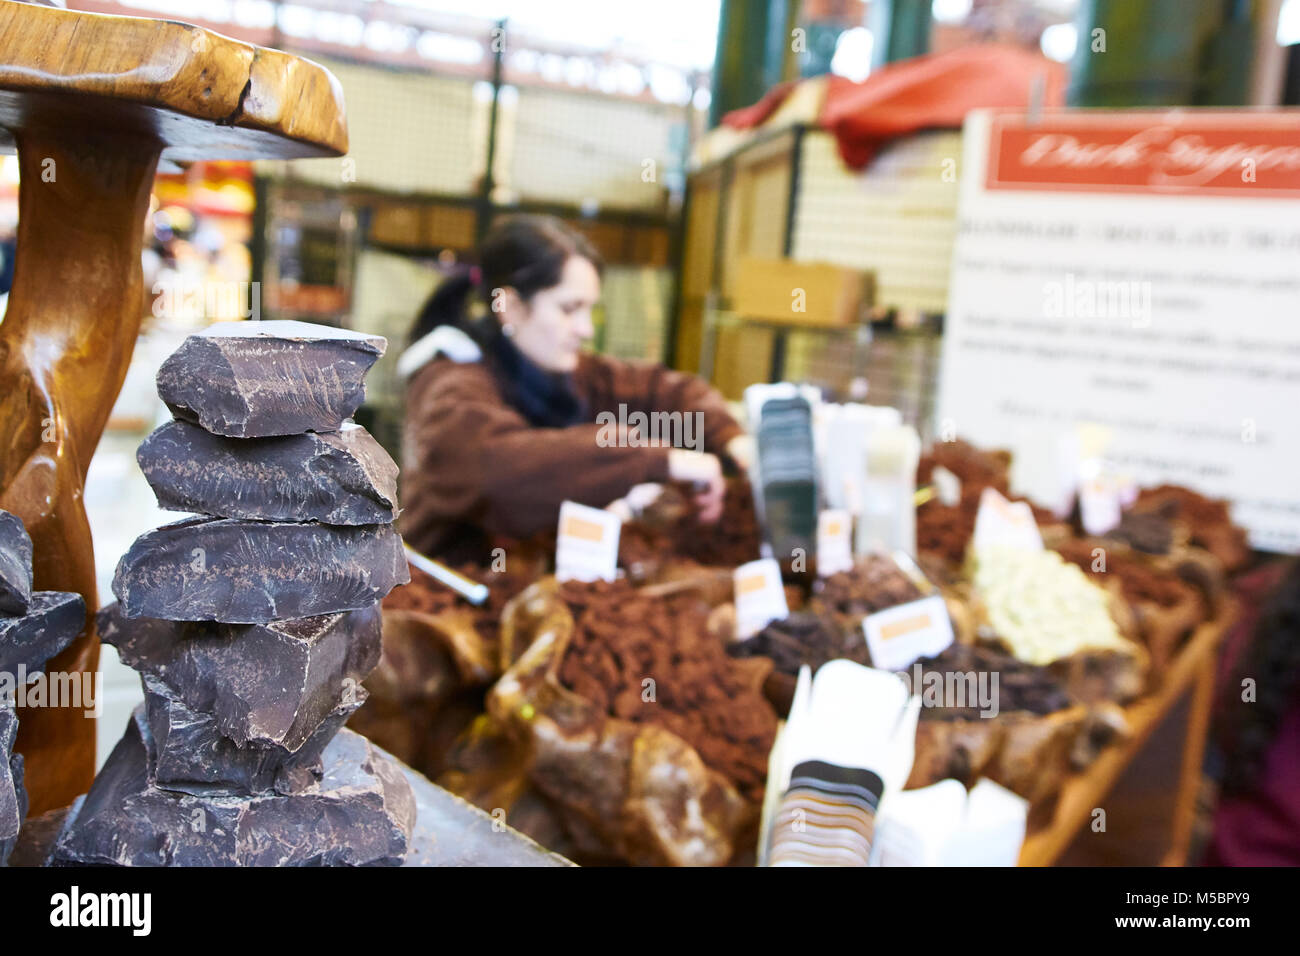 Images of fresh food stalls at the Borough Market in Southwark, London, UK. Stock Photo